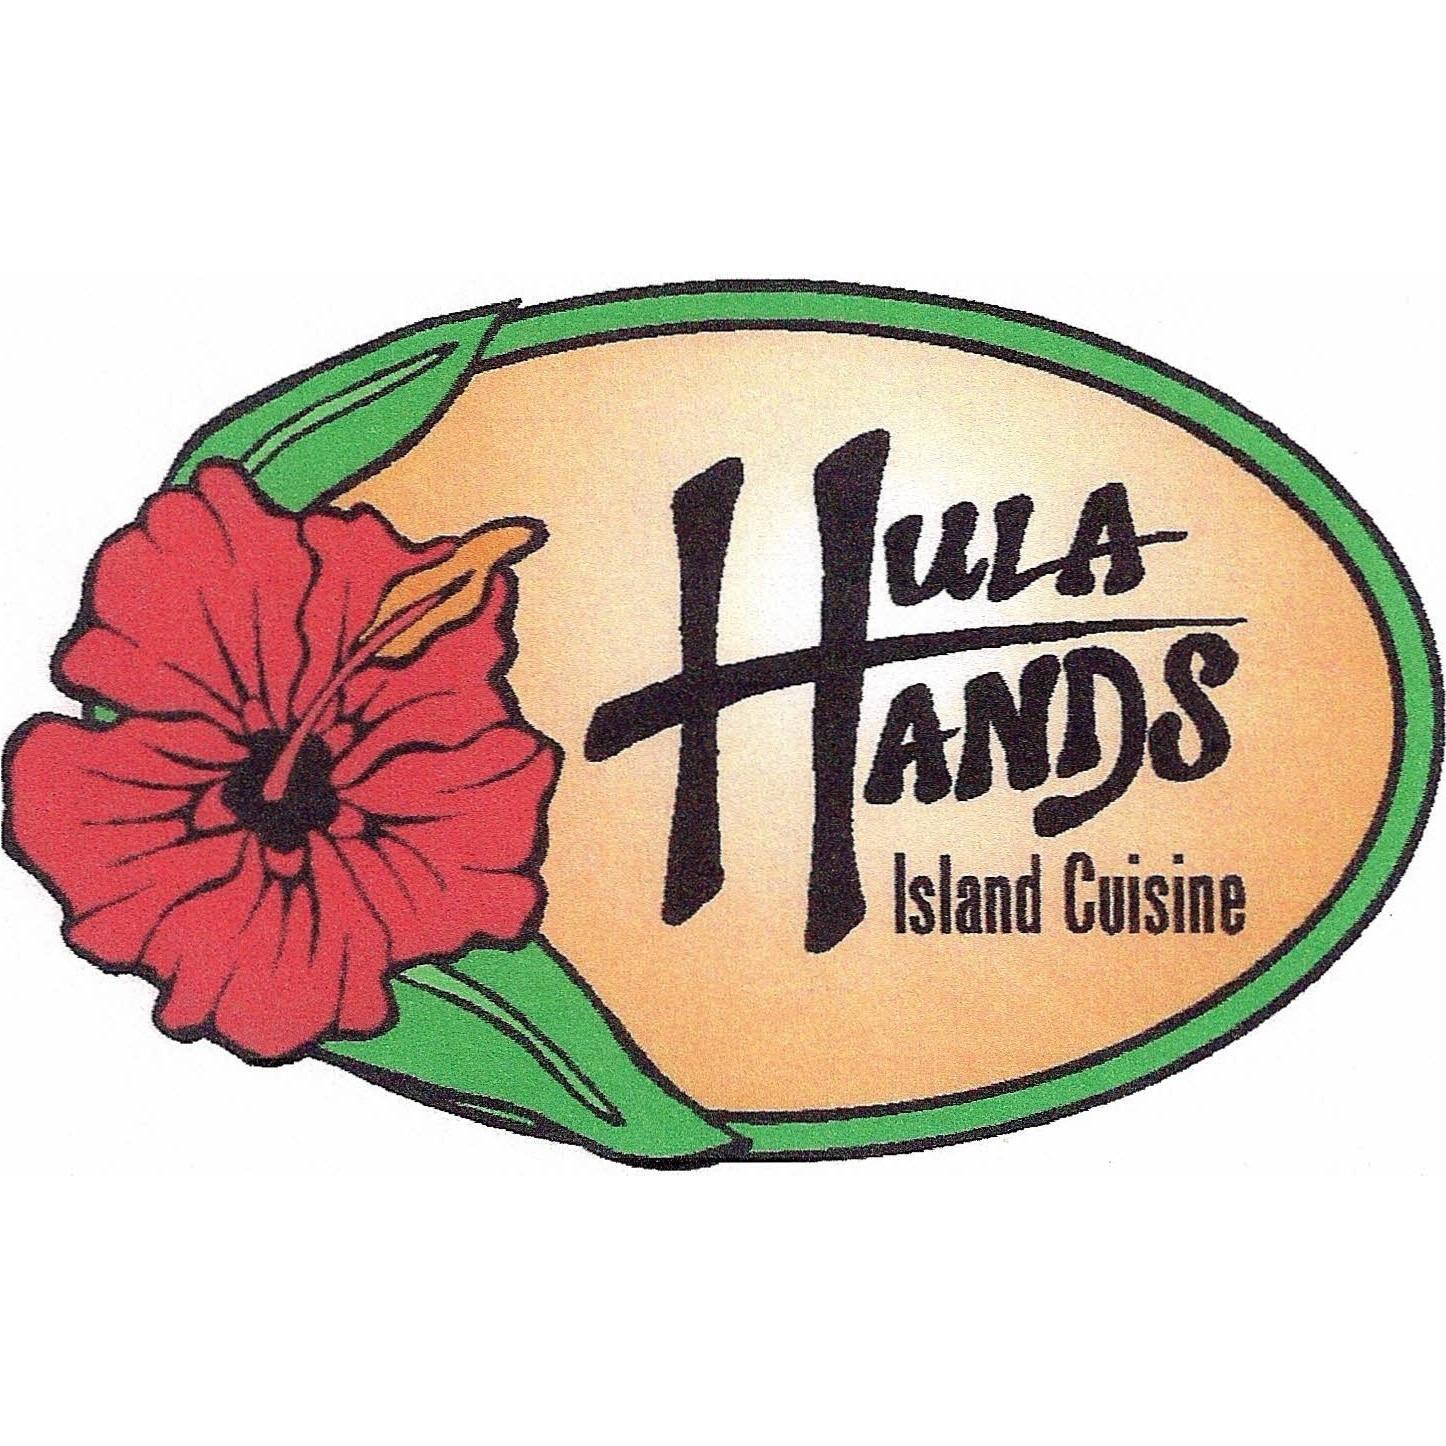 Hula Hands Restaurant 4630 Logo